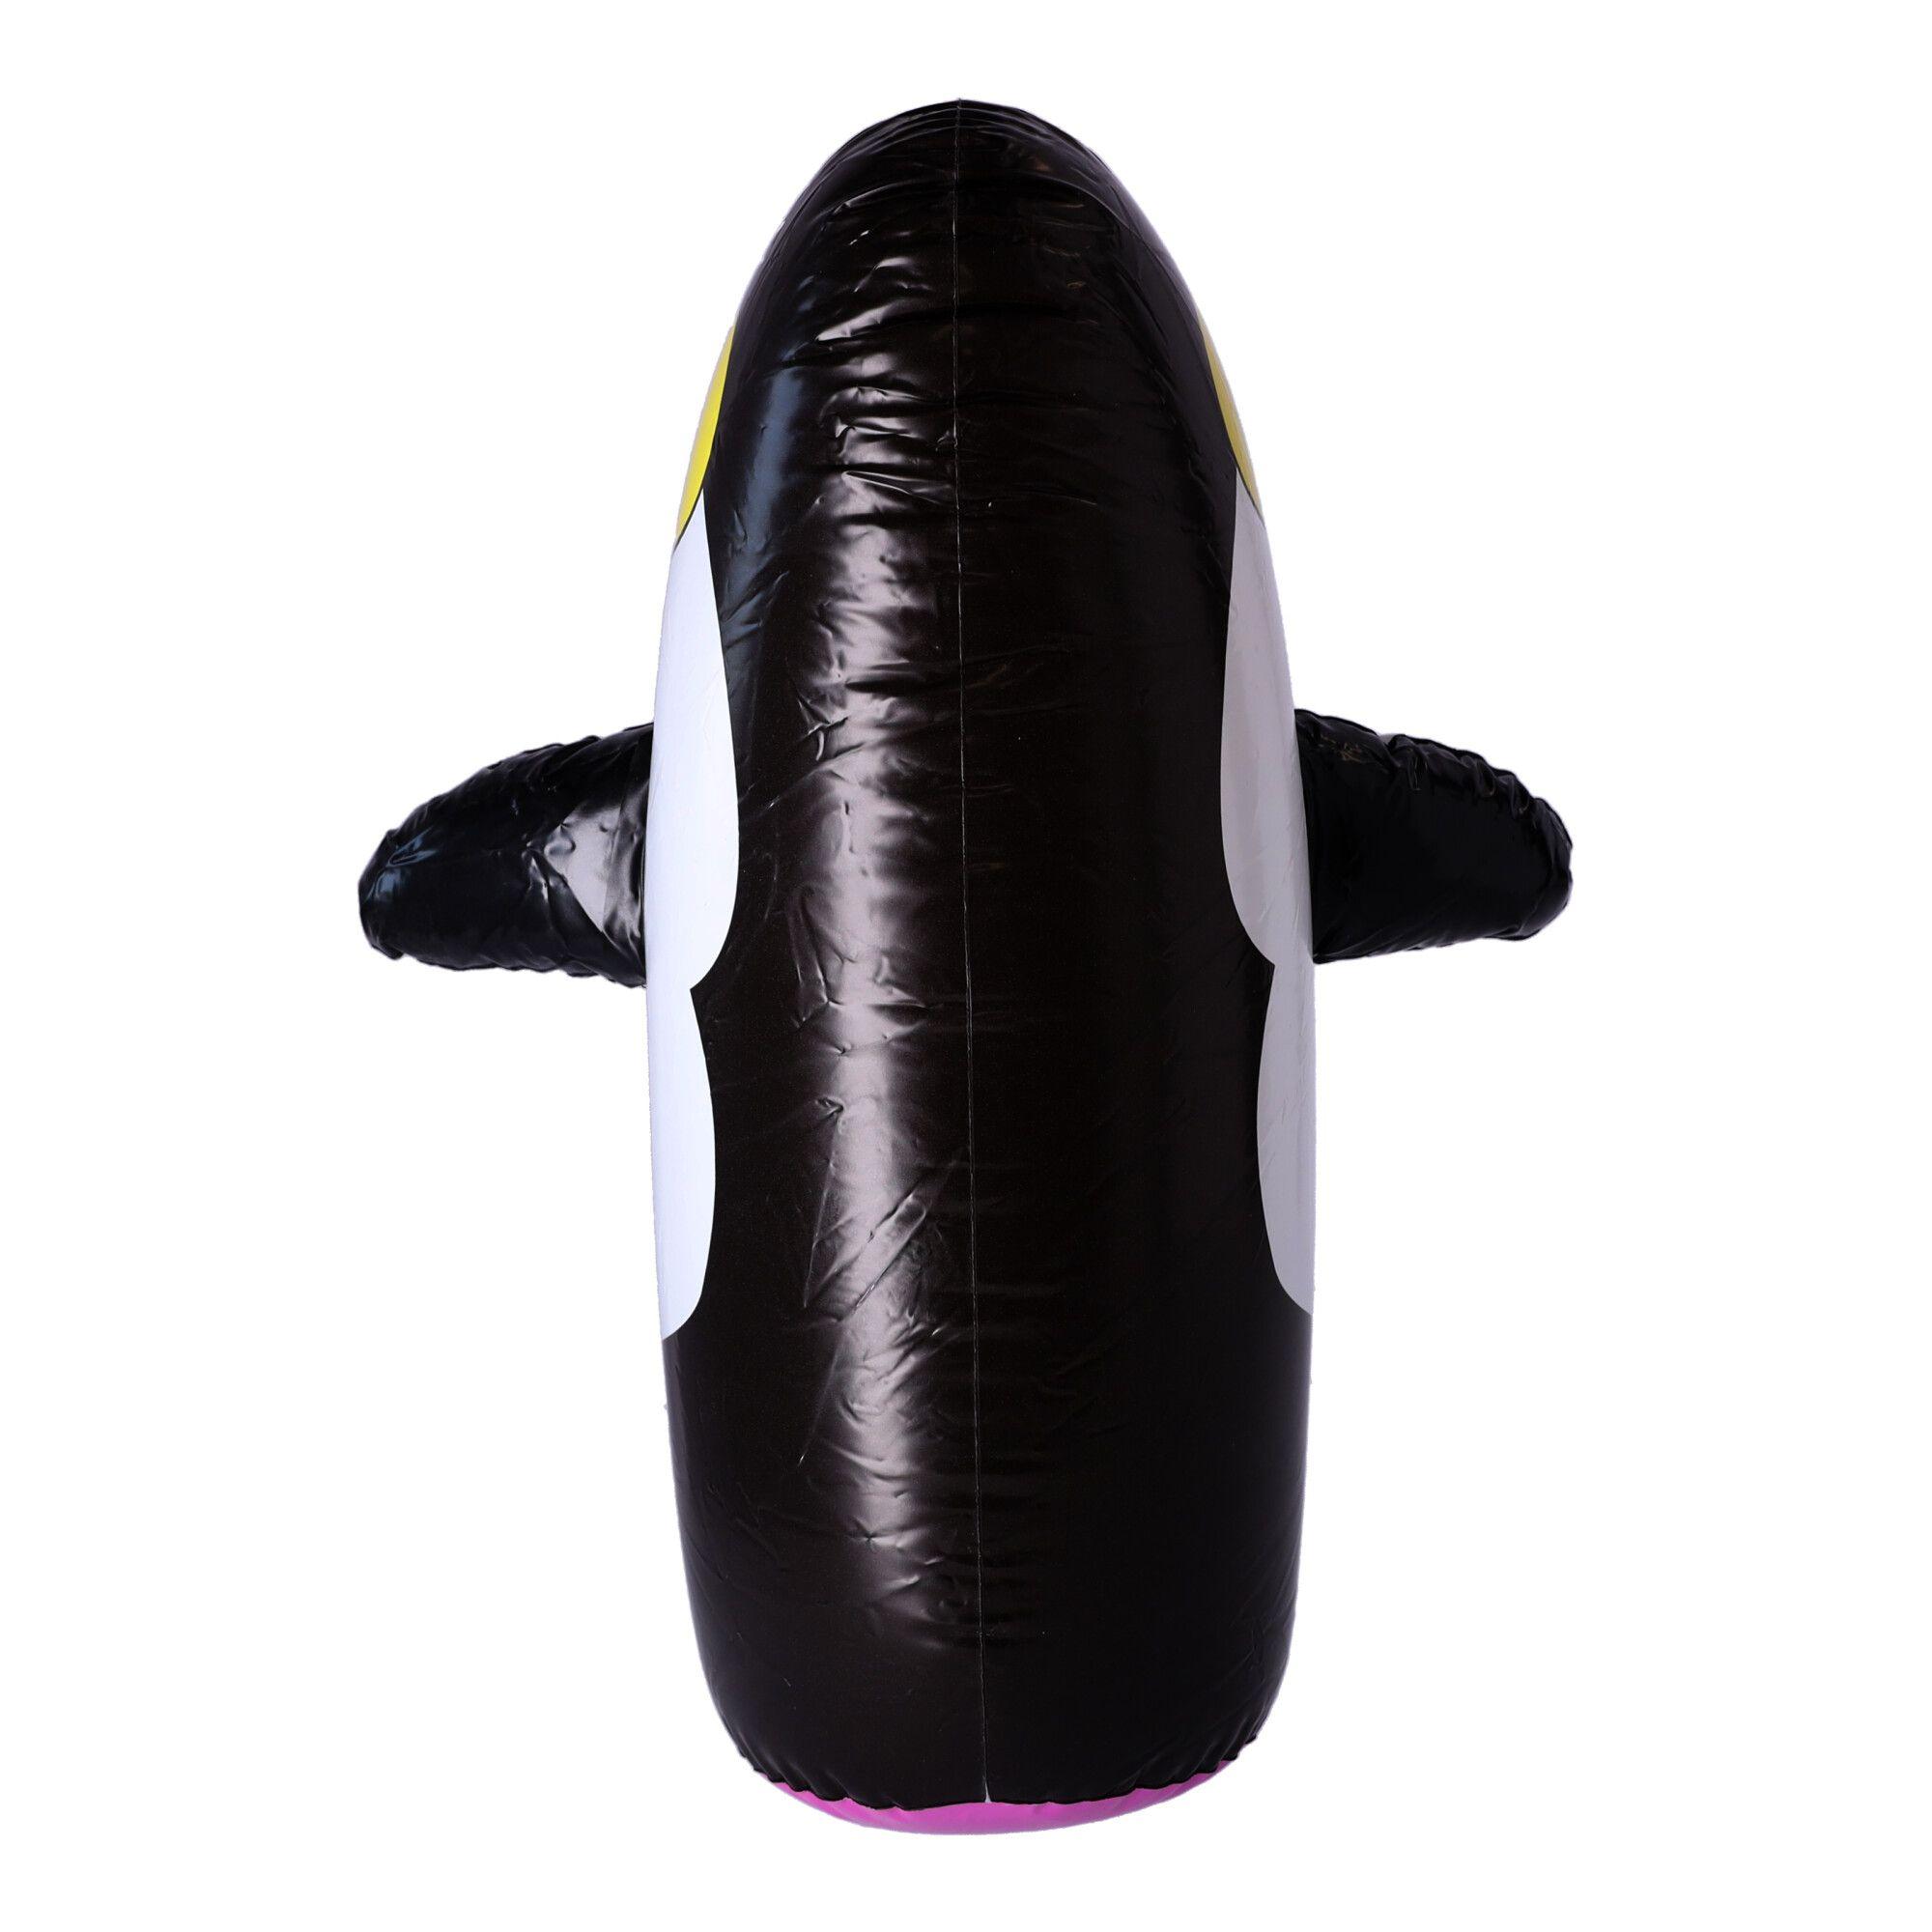 Inflatable punching bag for children, Toy for children - penguin, 45 cm.